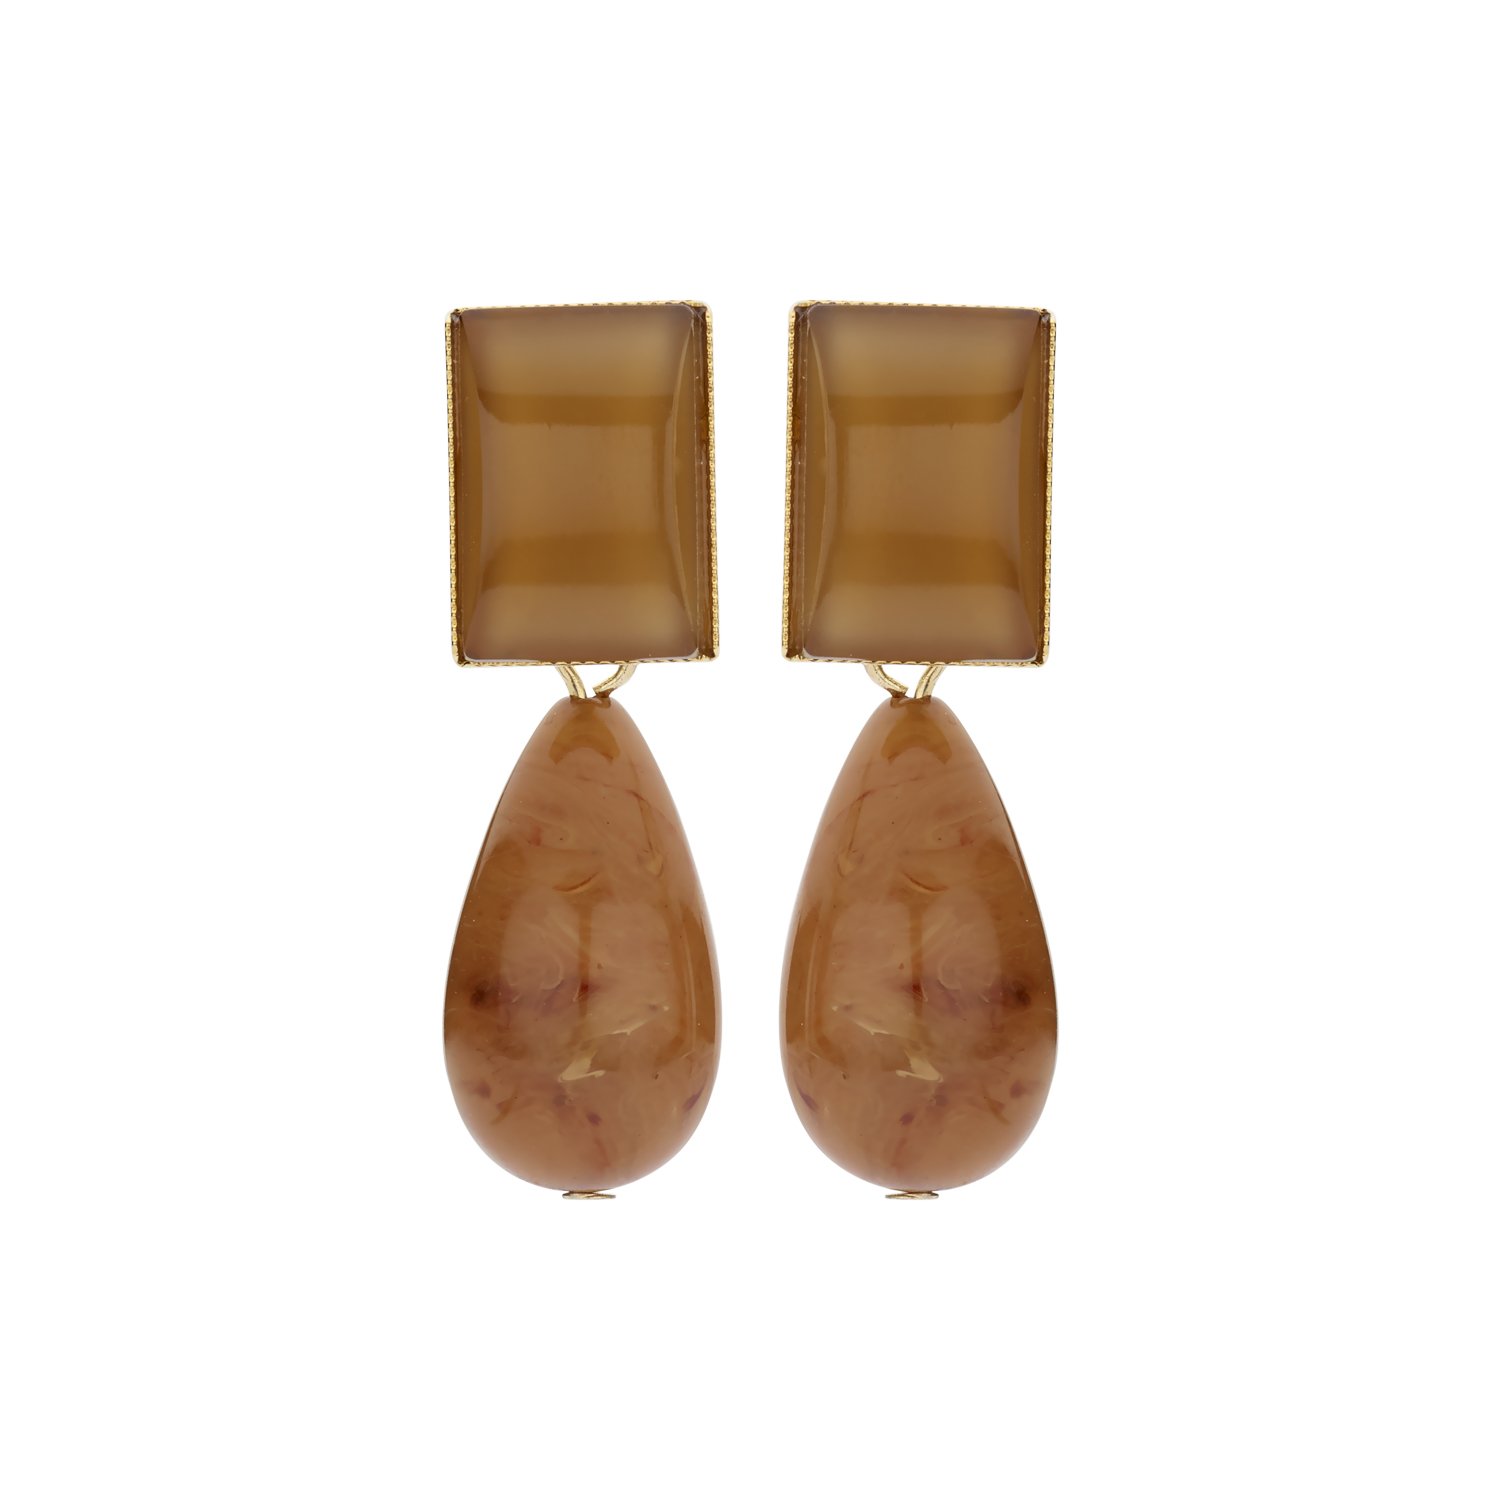 New Playa camel earrings - Souvenirs de Pomme